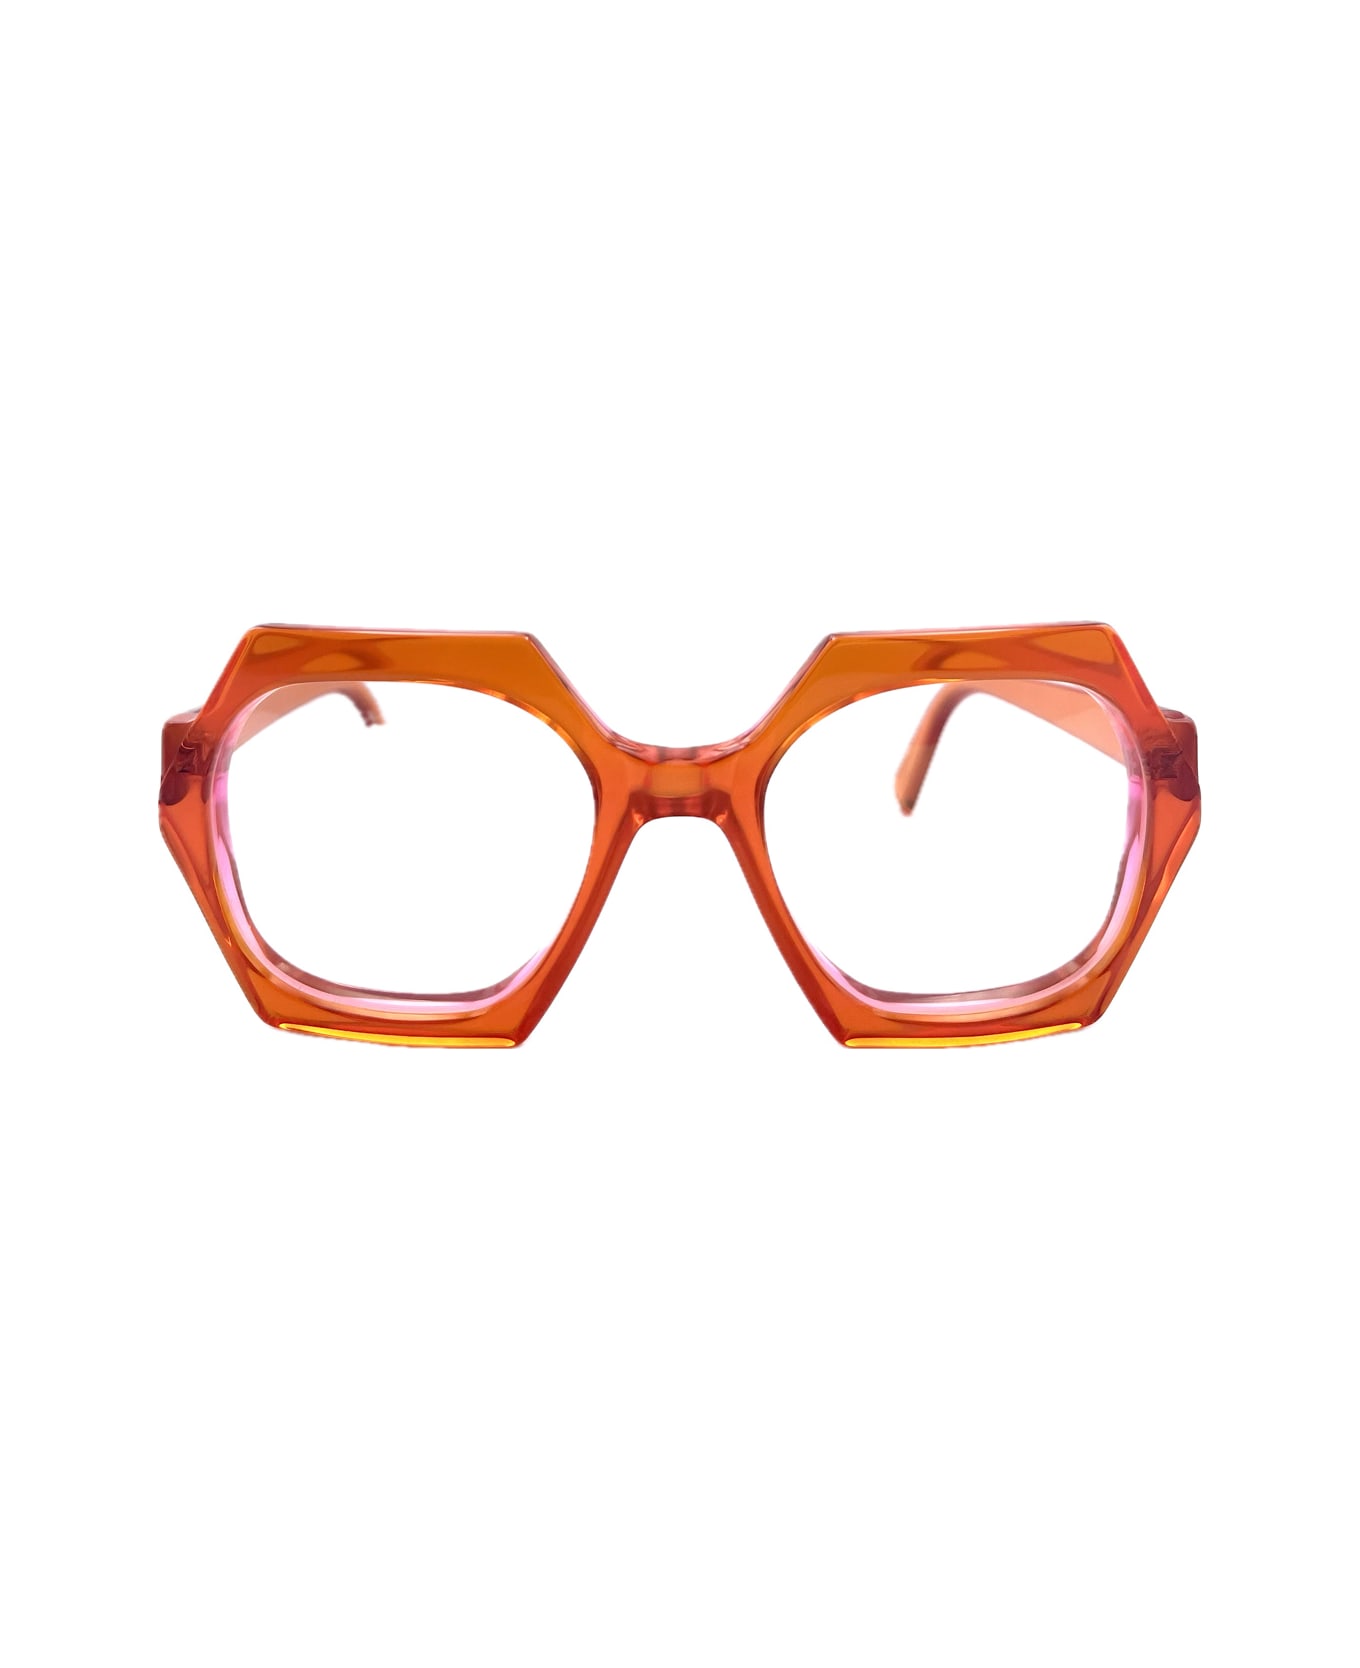 Kirk & Kirk Penelope K26 Melon Glasses - Arancione